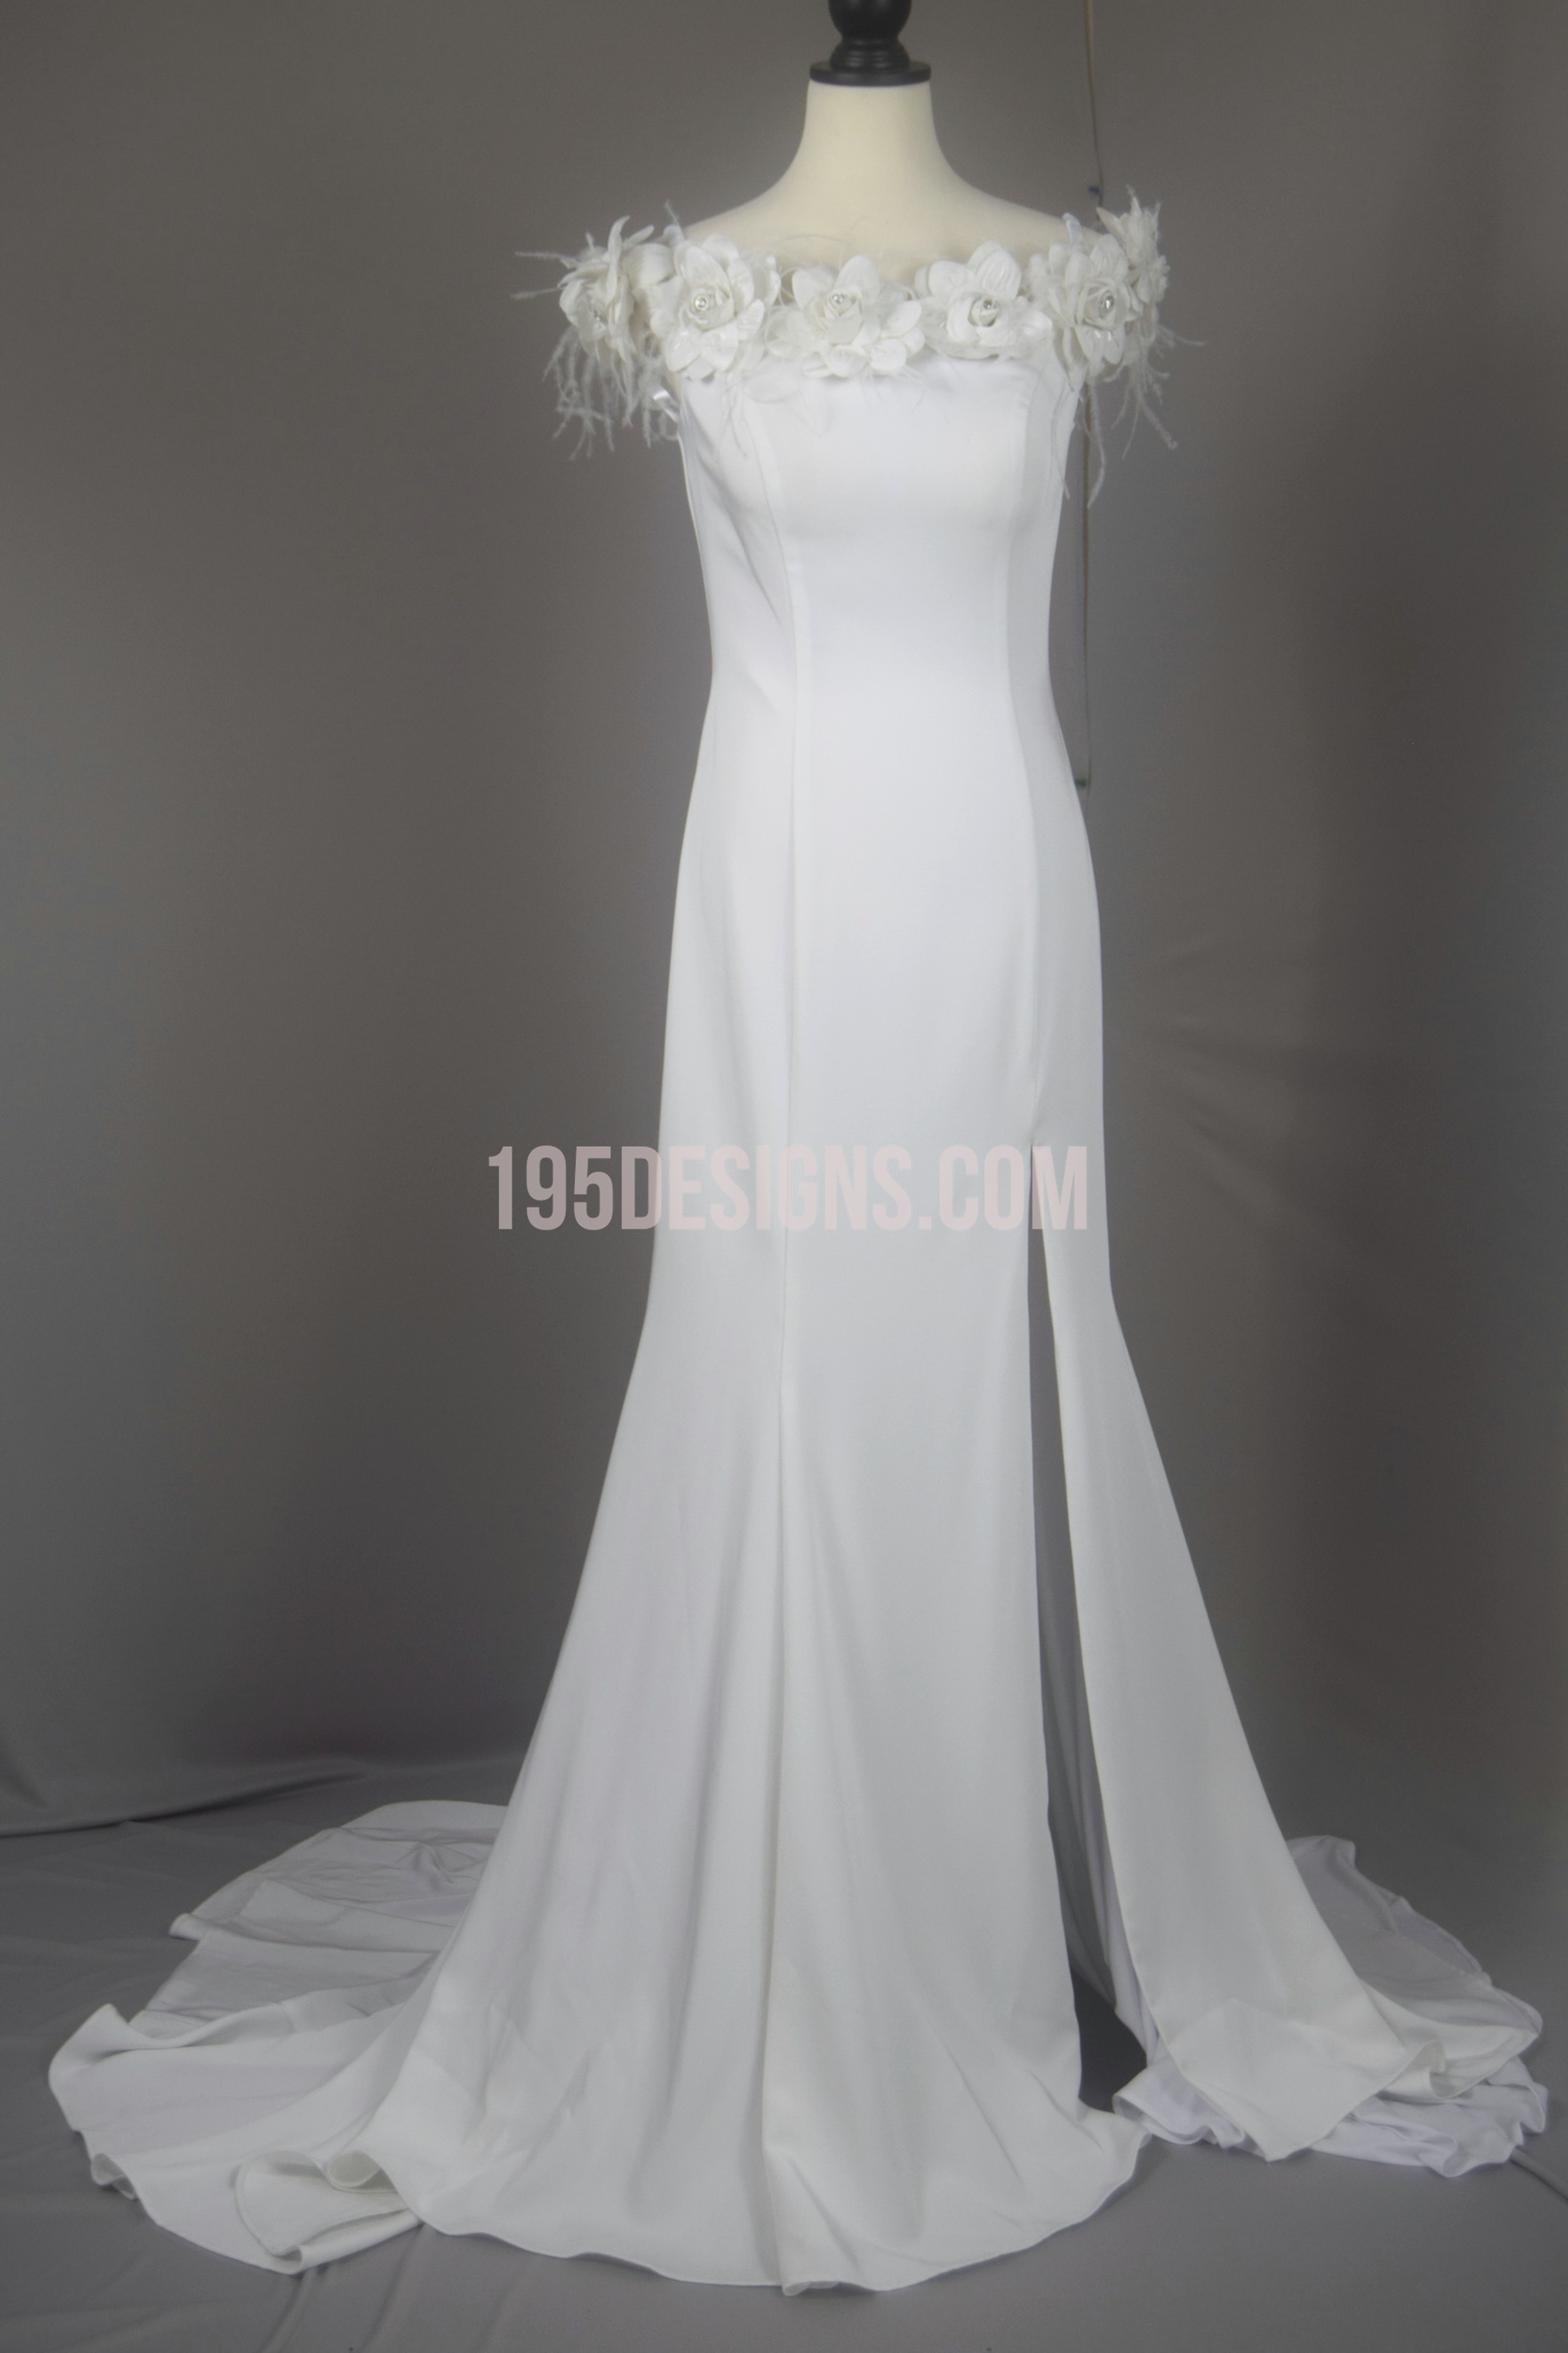 PANOPLY White Flower Wedding Dress